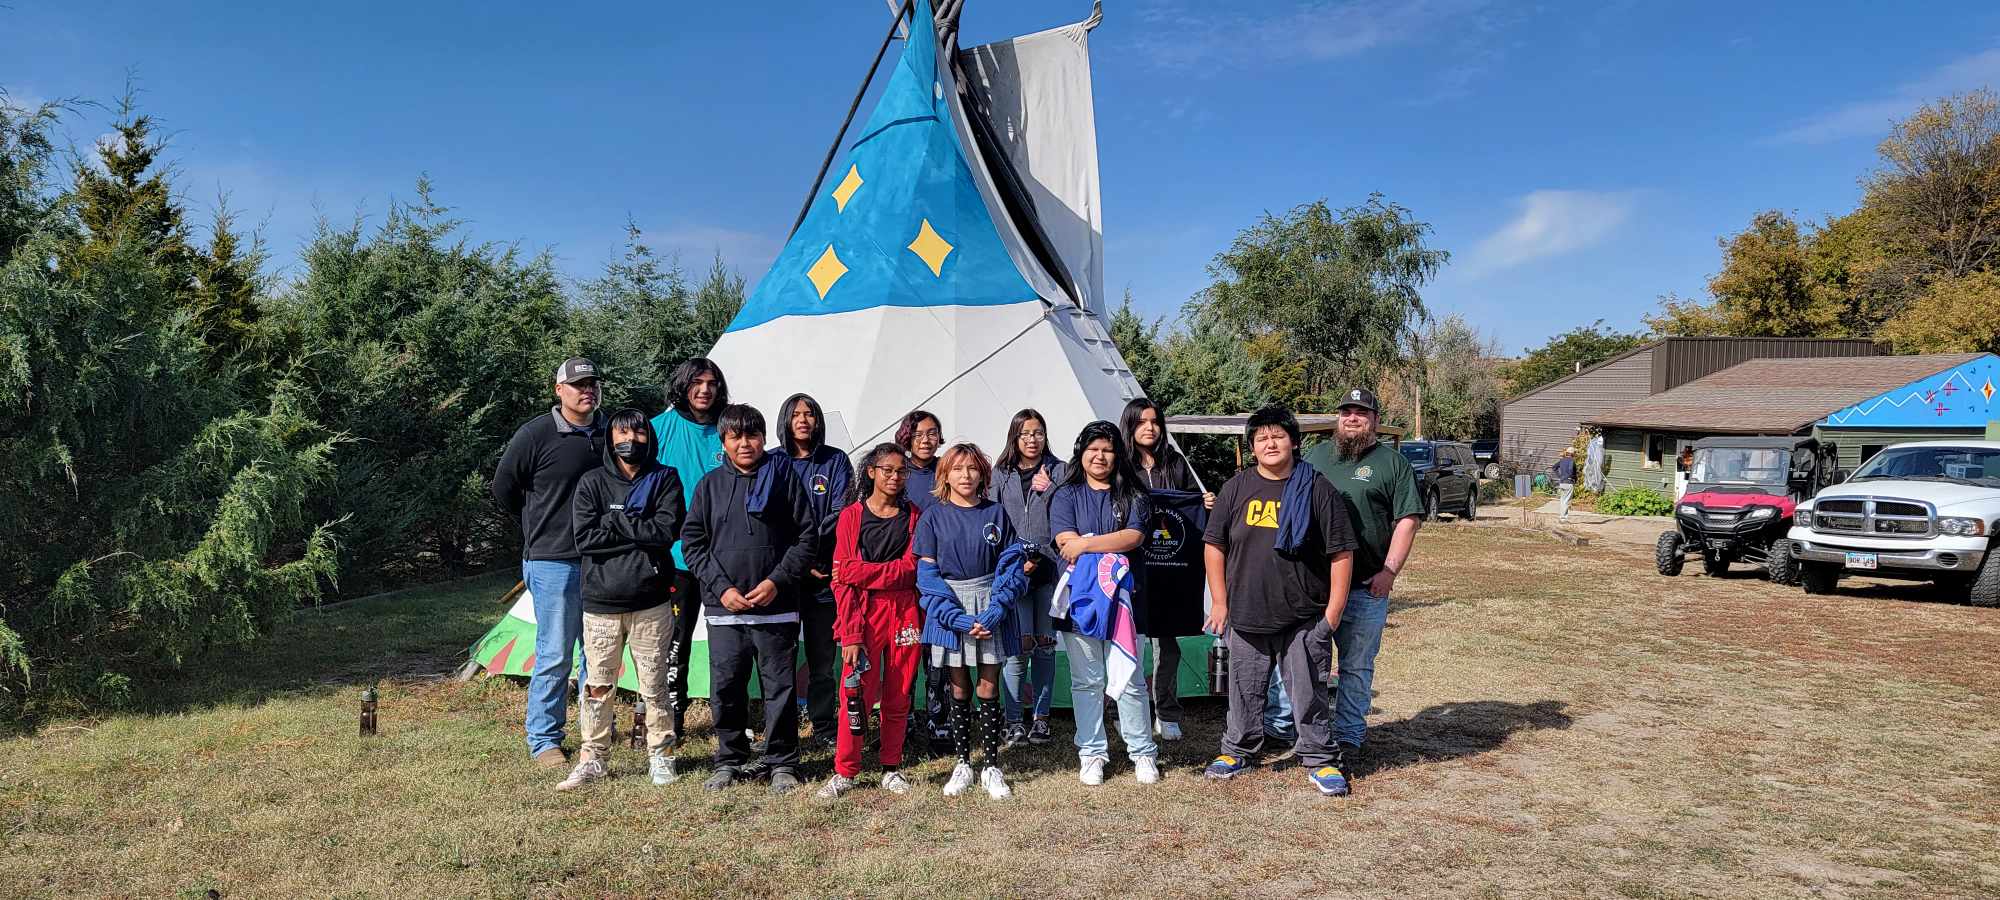 Milk's Camp Lakota Youth Development